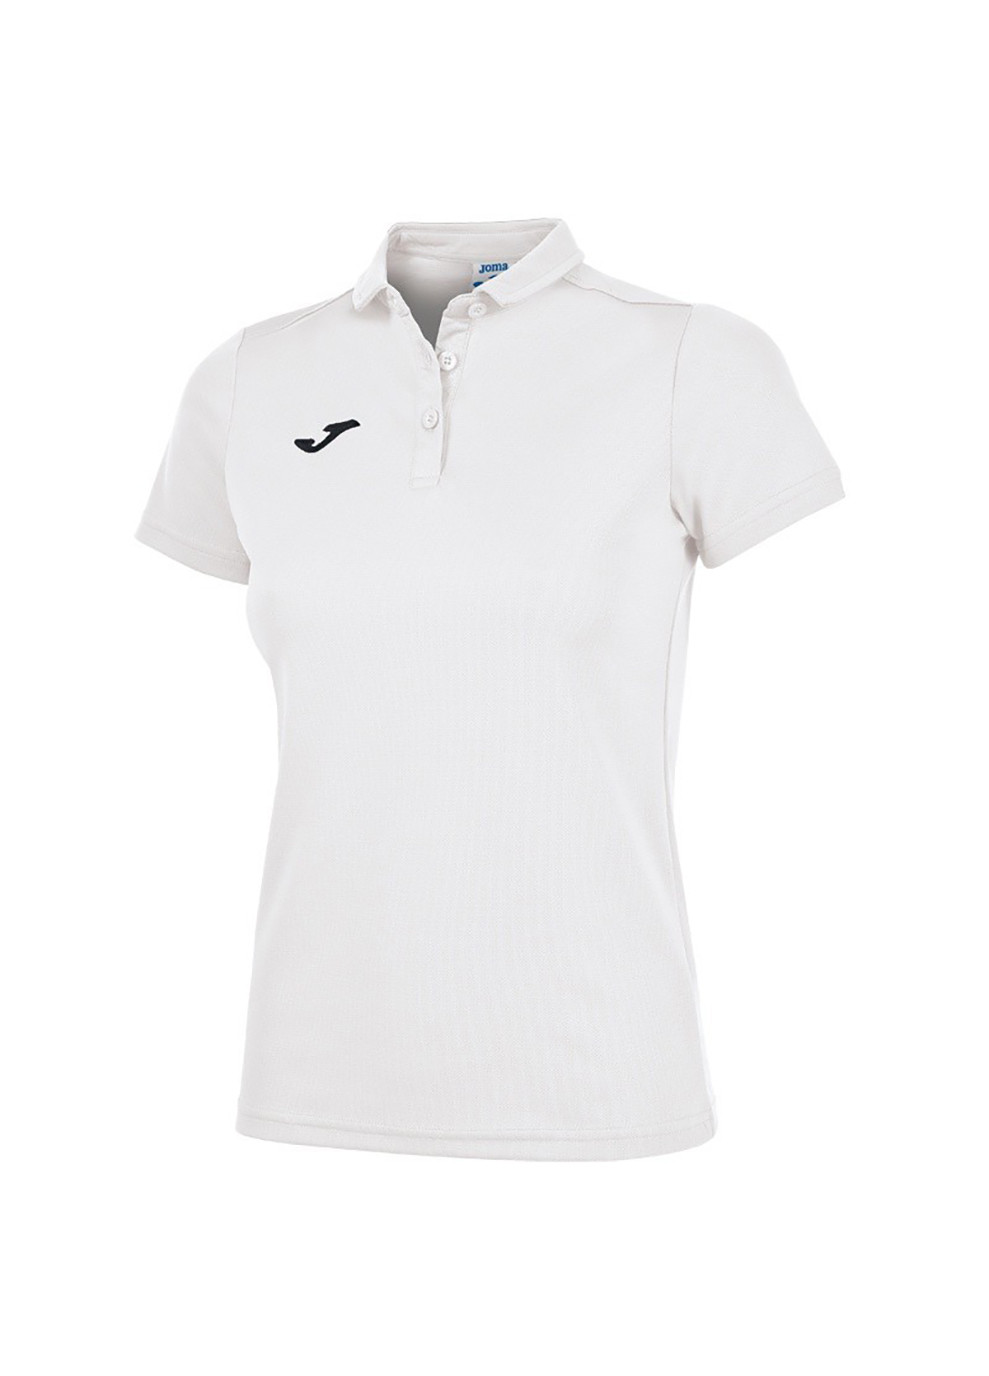 Белая женская футболка-поло hobby women poo shirt white s/s белый Joma с логотипом